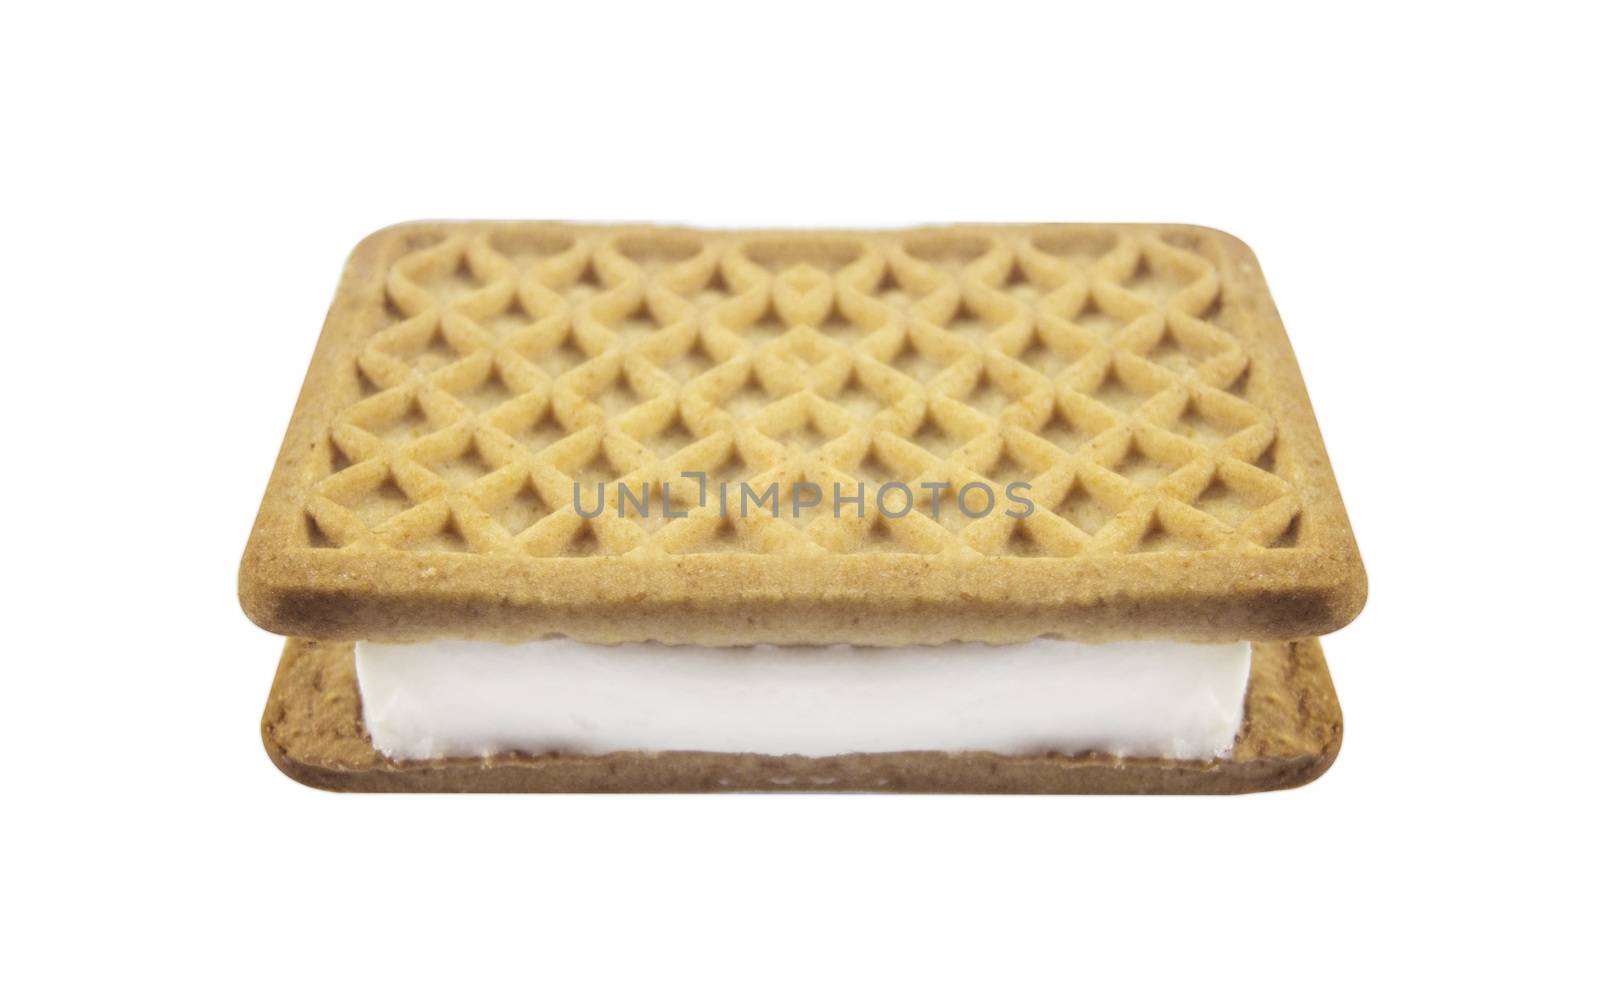 Vanilla and cookie ice cream sandwich bar on white background.